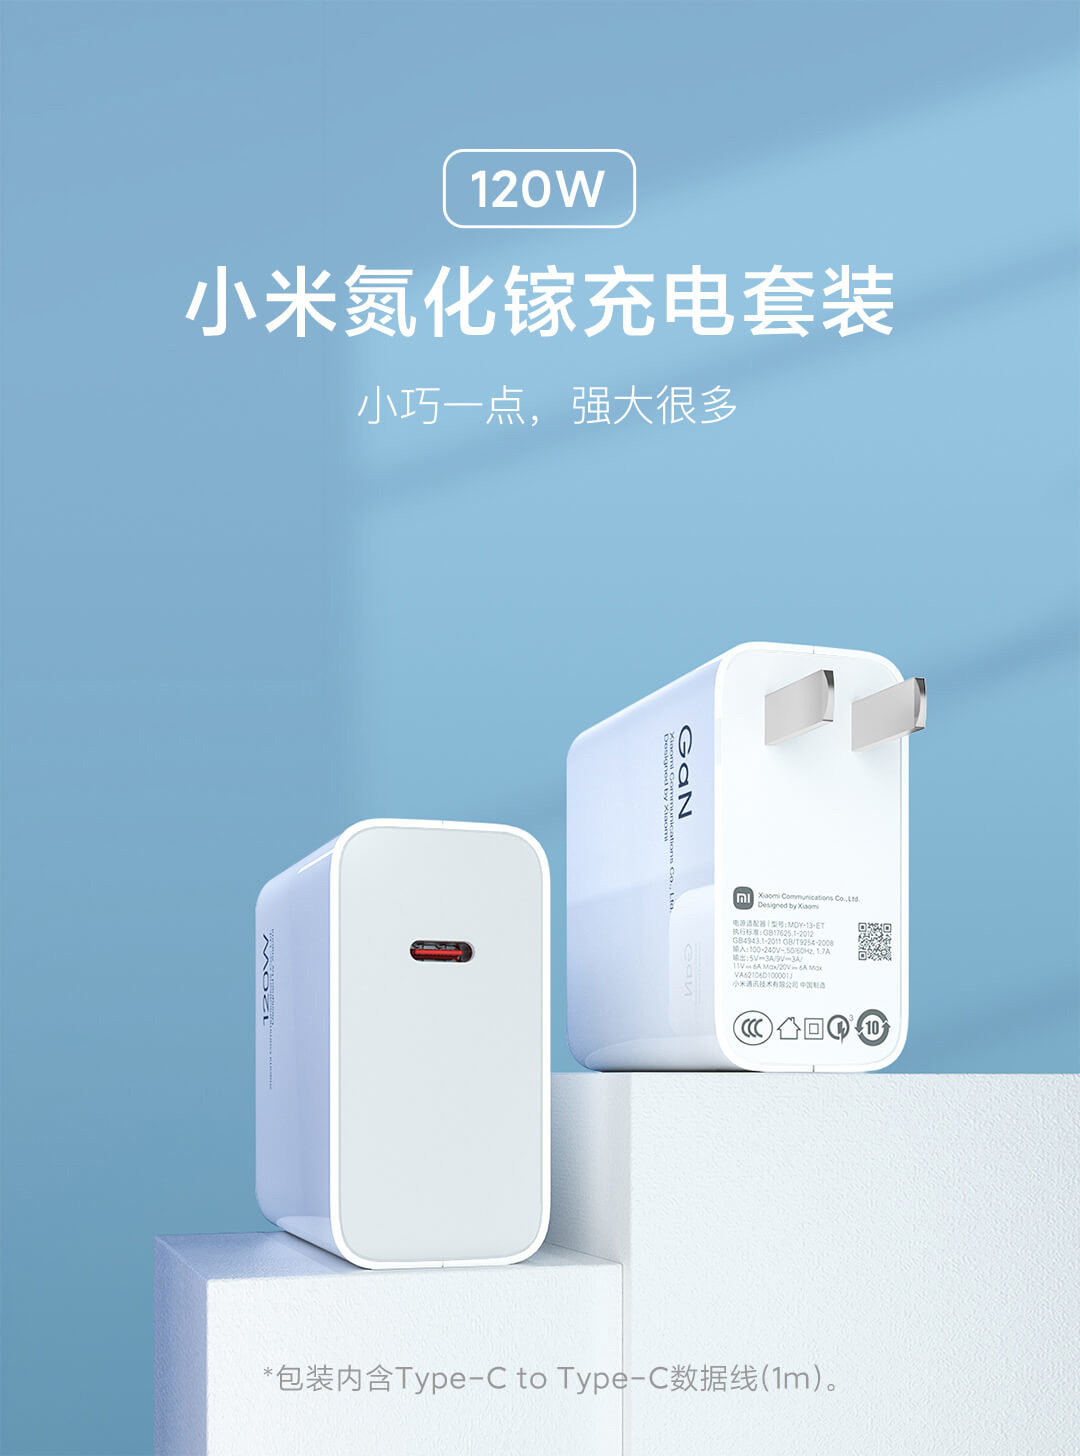 xiaomi-new-120w-charge-my-device-diluncurkan-ke pasar 